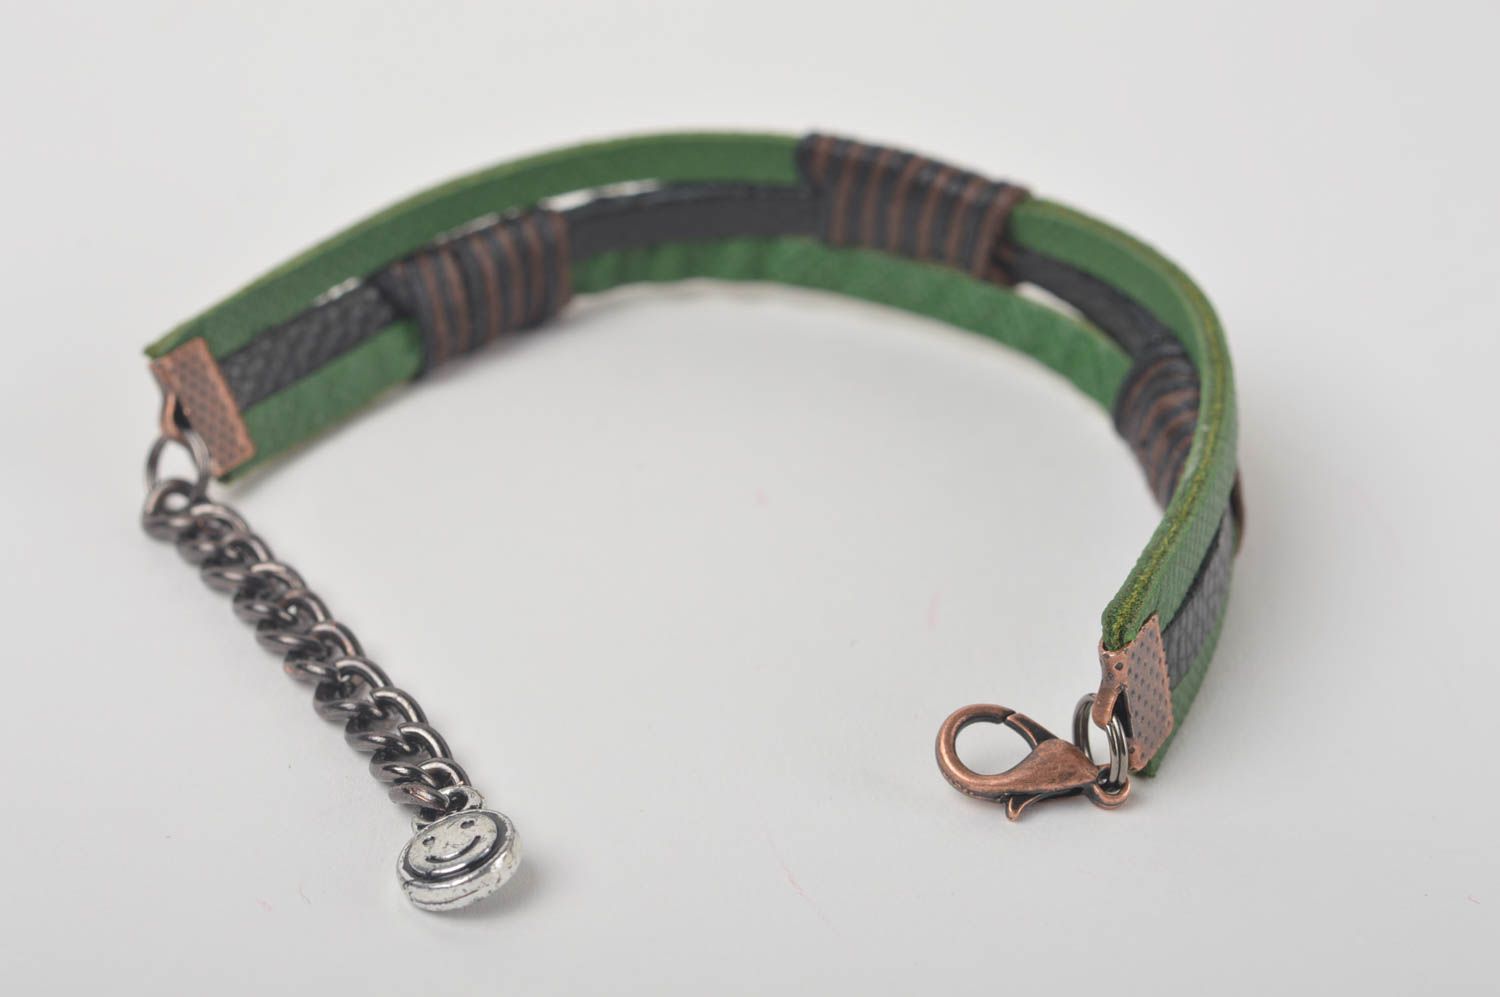 Stylish handmade leather bracelet designs leather goods fashion accessories photo 4